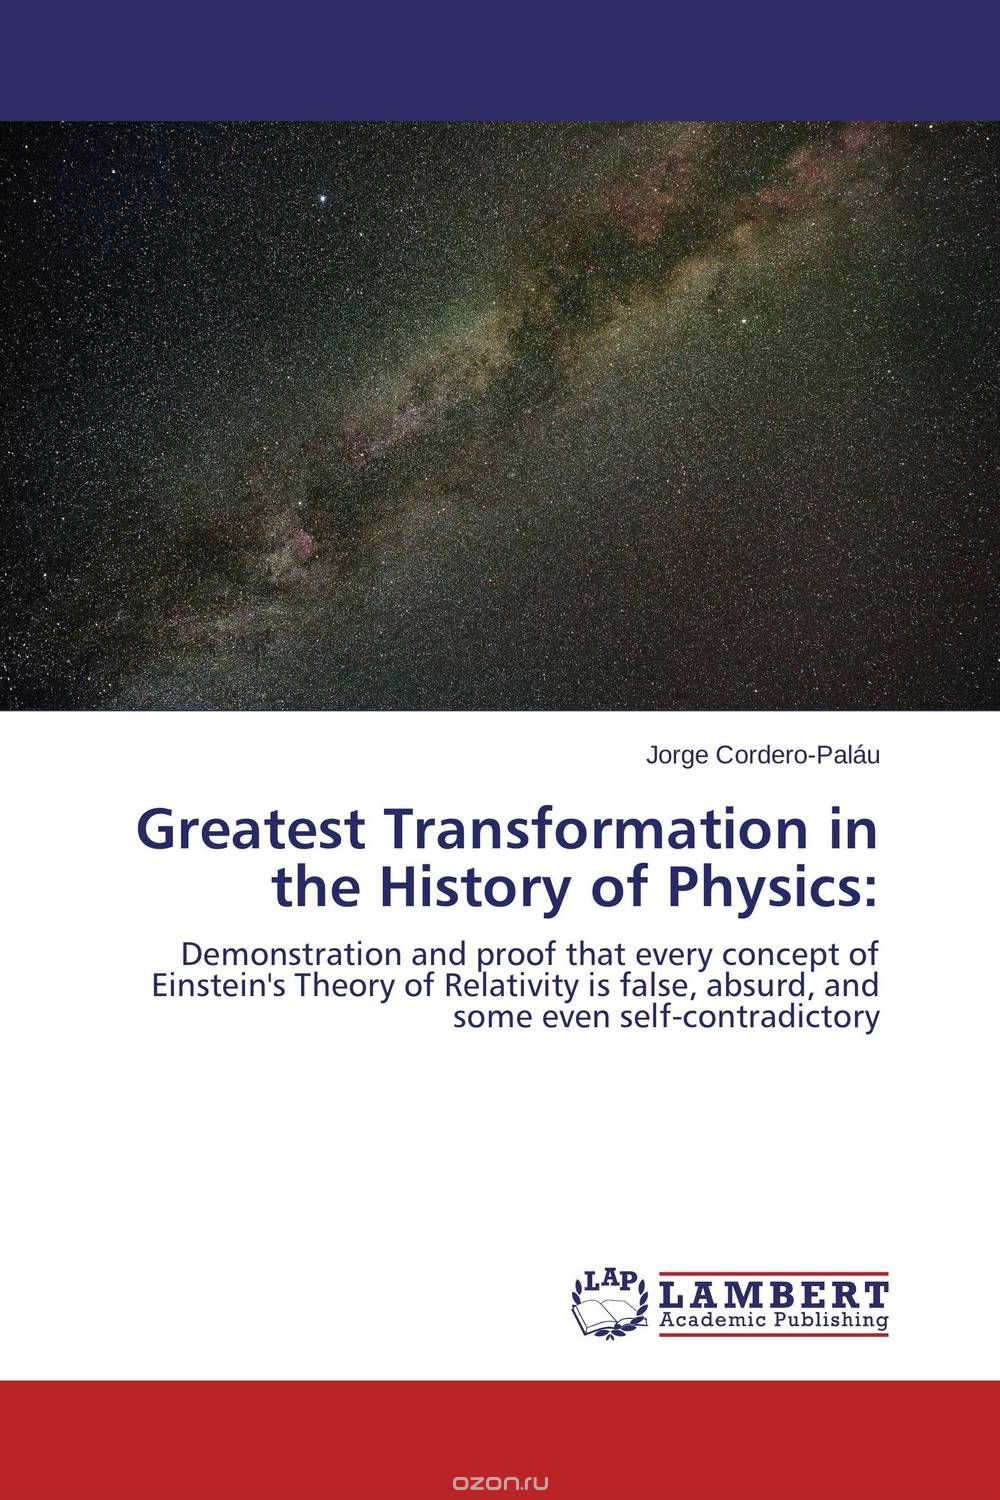 Скачать книгу "Greatest Transformation in the History of Physics:"